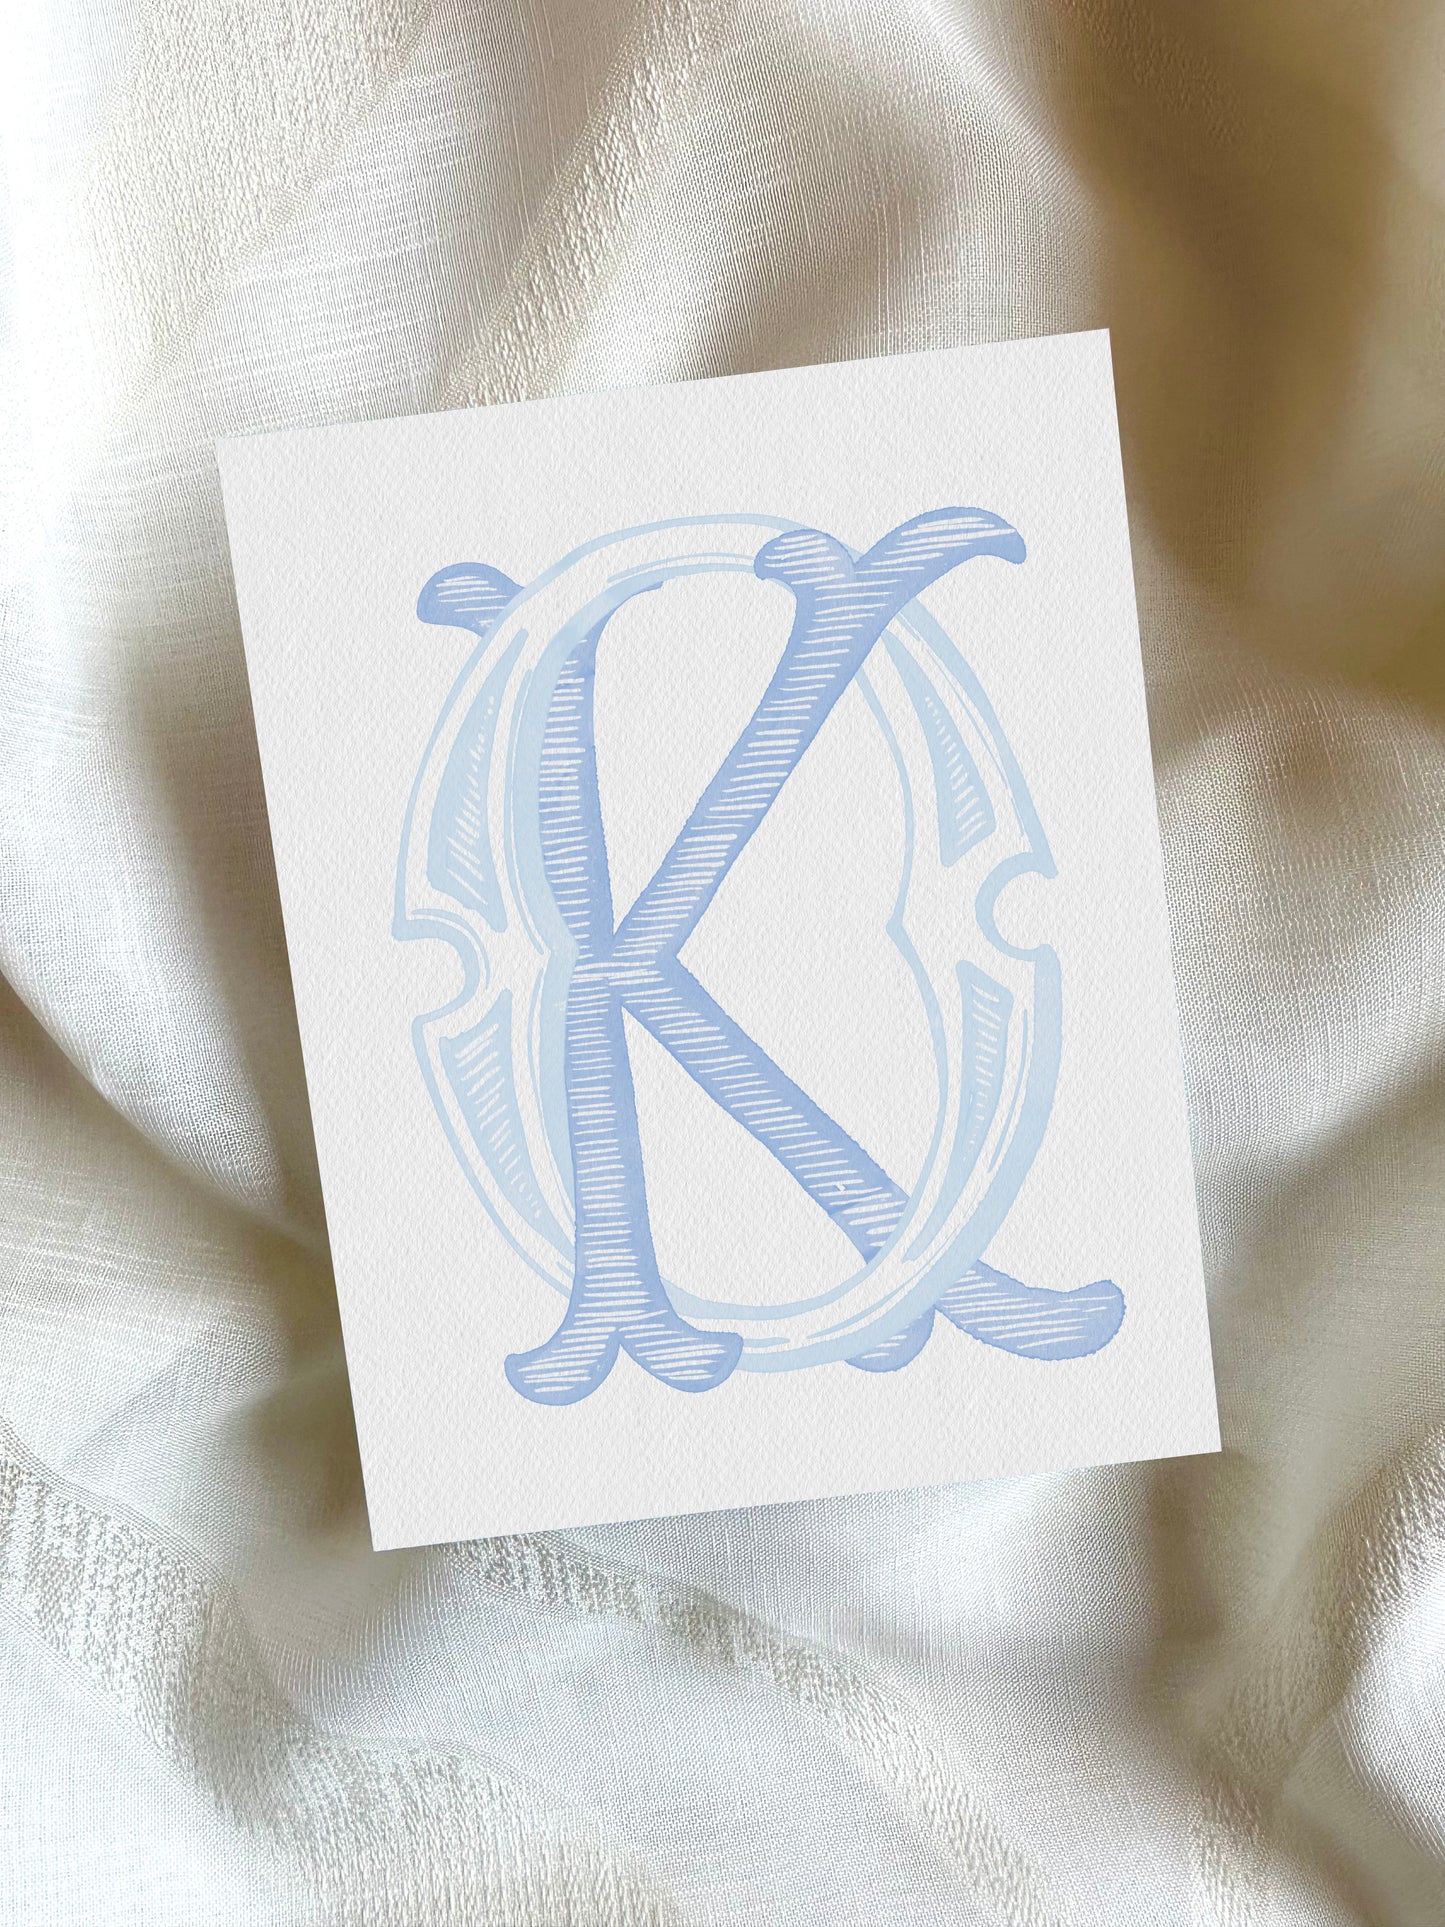 2 Letter Monogram with Letters KO OK | Digital Download - Wedding Monogram SVG, Personal Logo, Wedding Logo for Wedding Invitations The Wedding Crest Lab